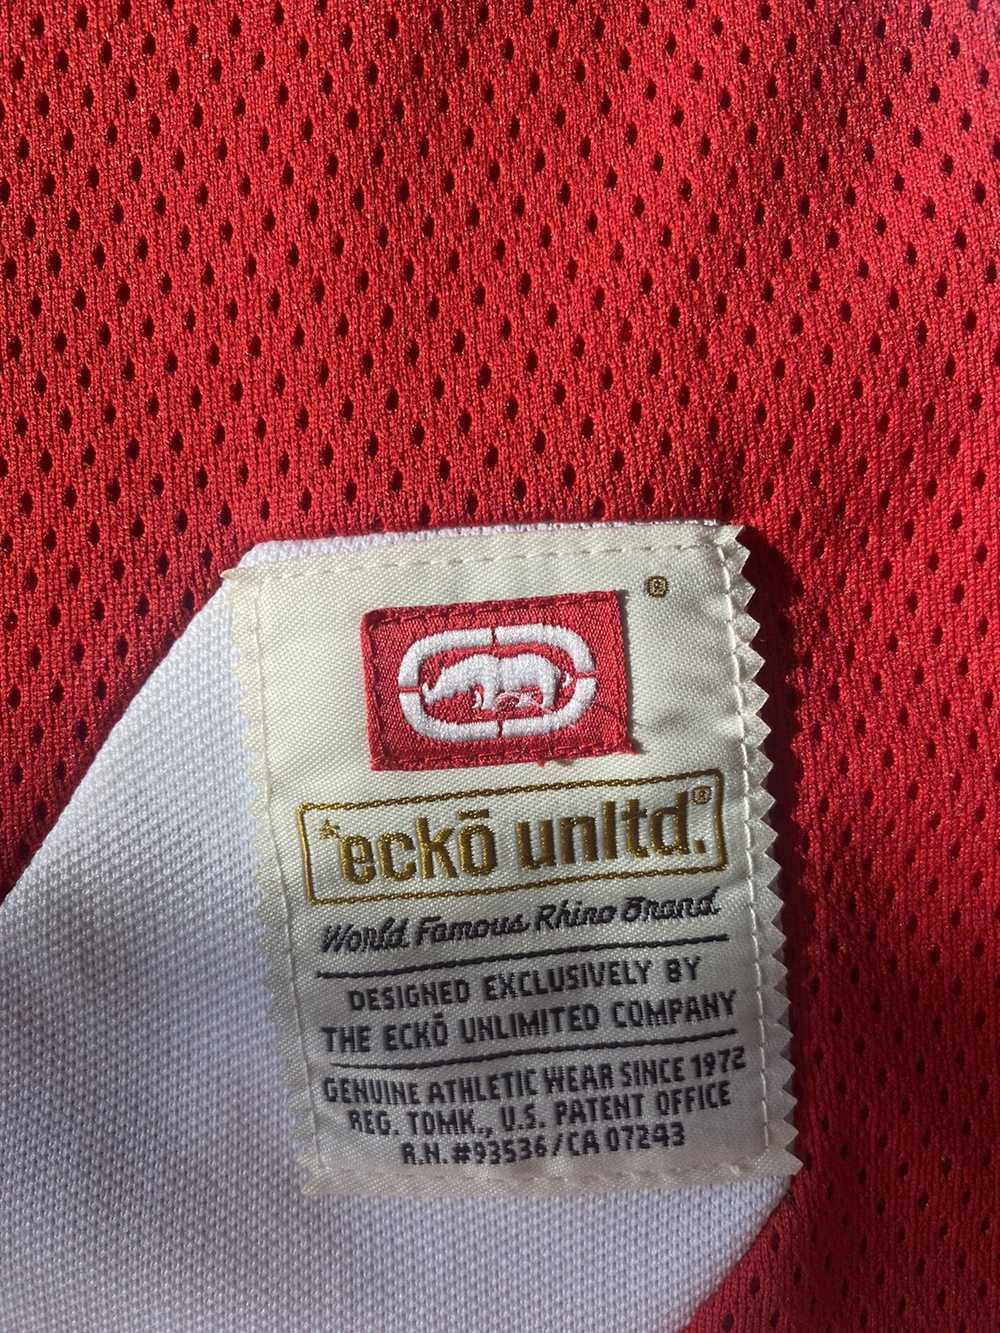 Ecko Unltd. Vintage Ecko Untld Jersey - image 2